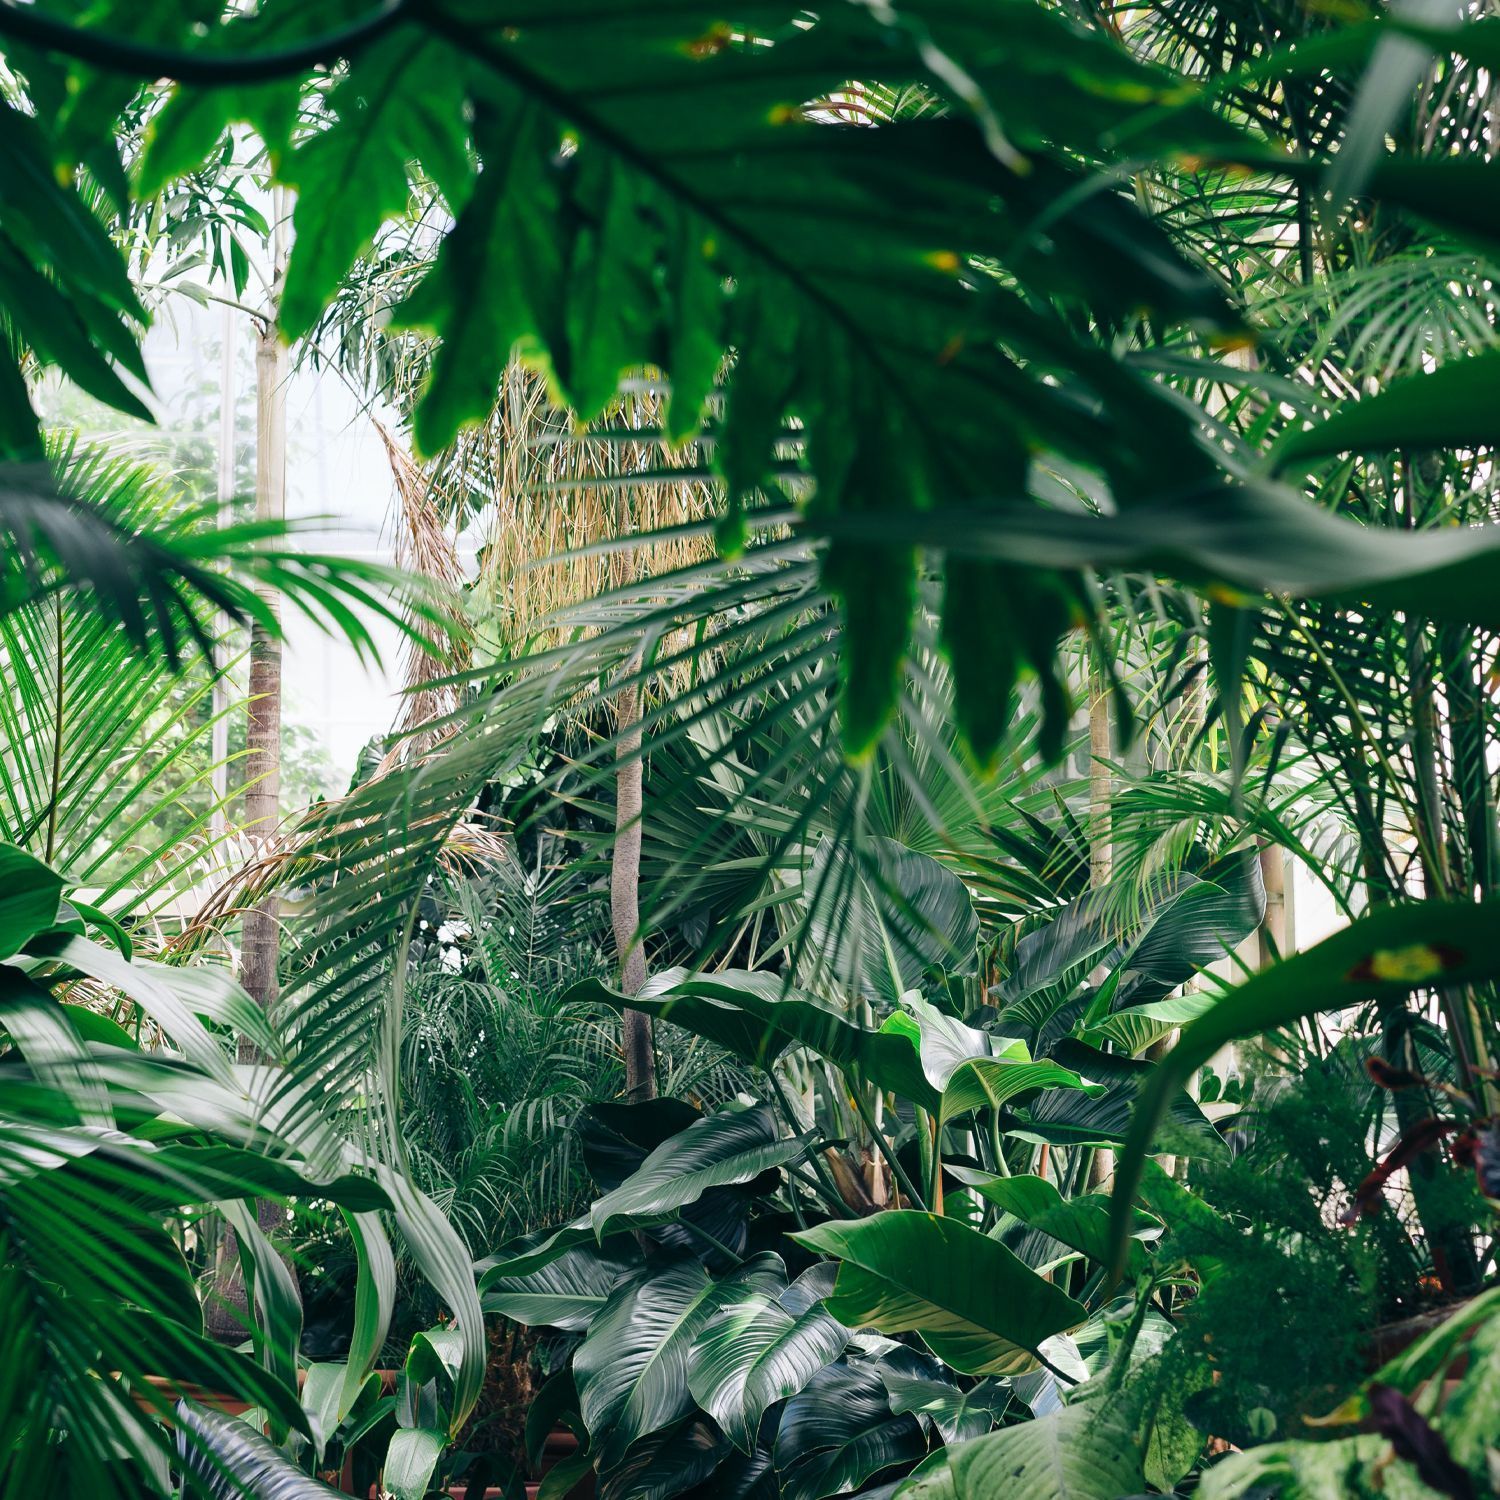 A dense jungle of green palm leaves - Jungle